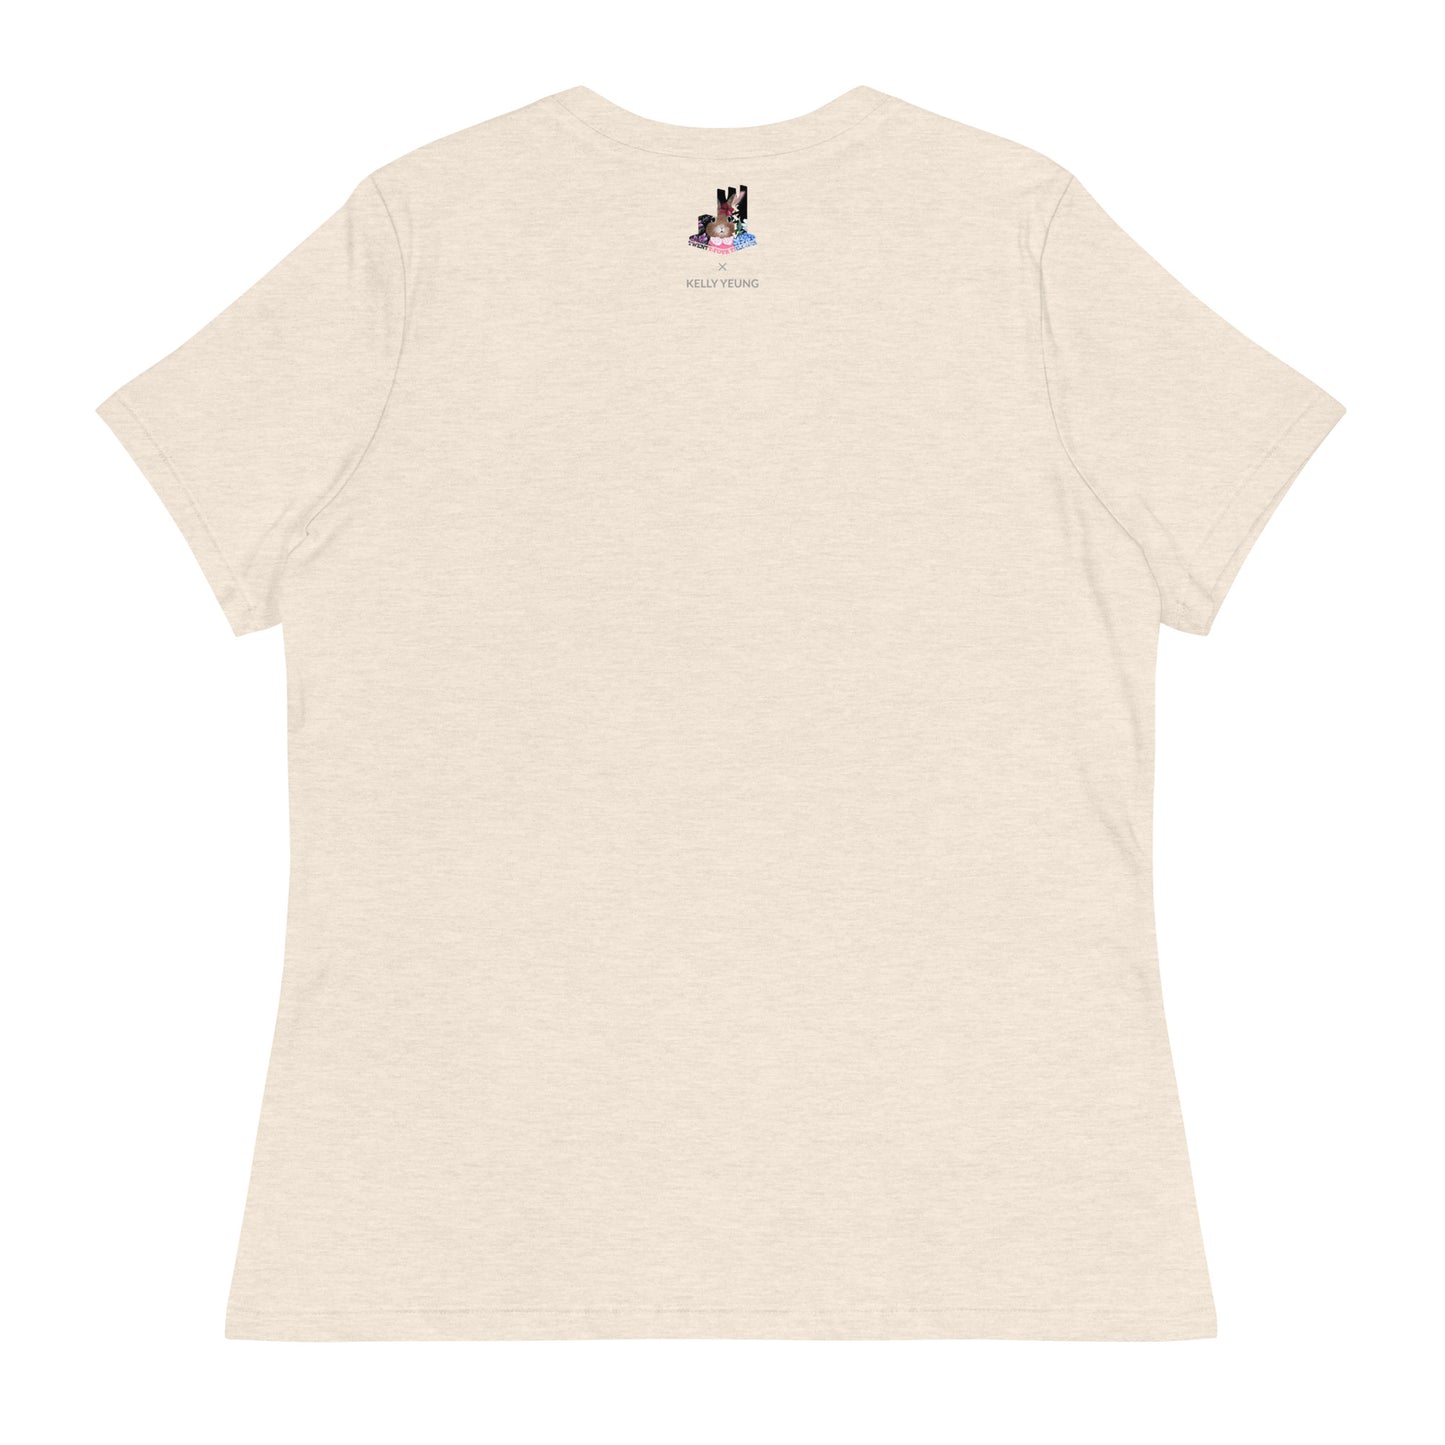 Hare Women's T-Shirt